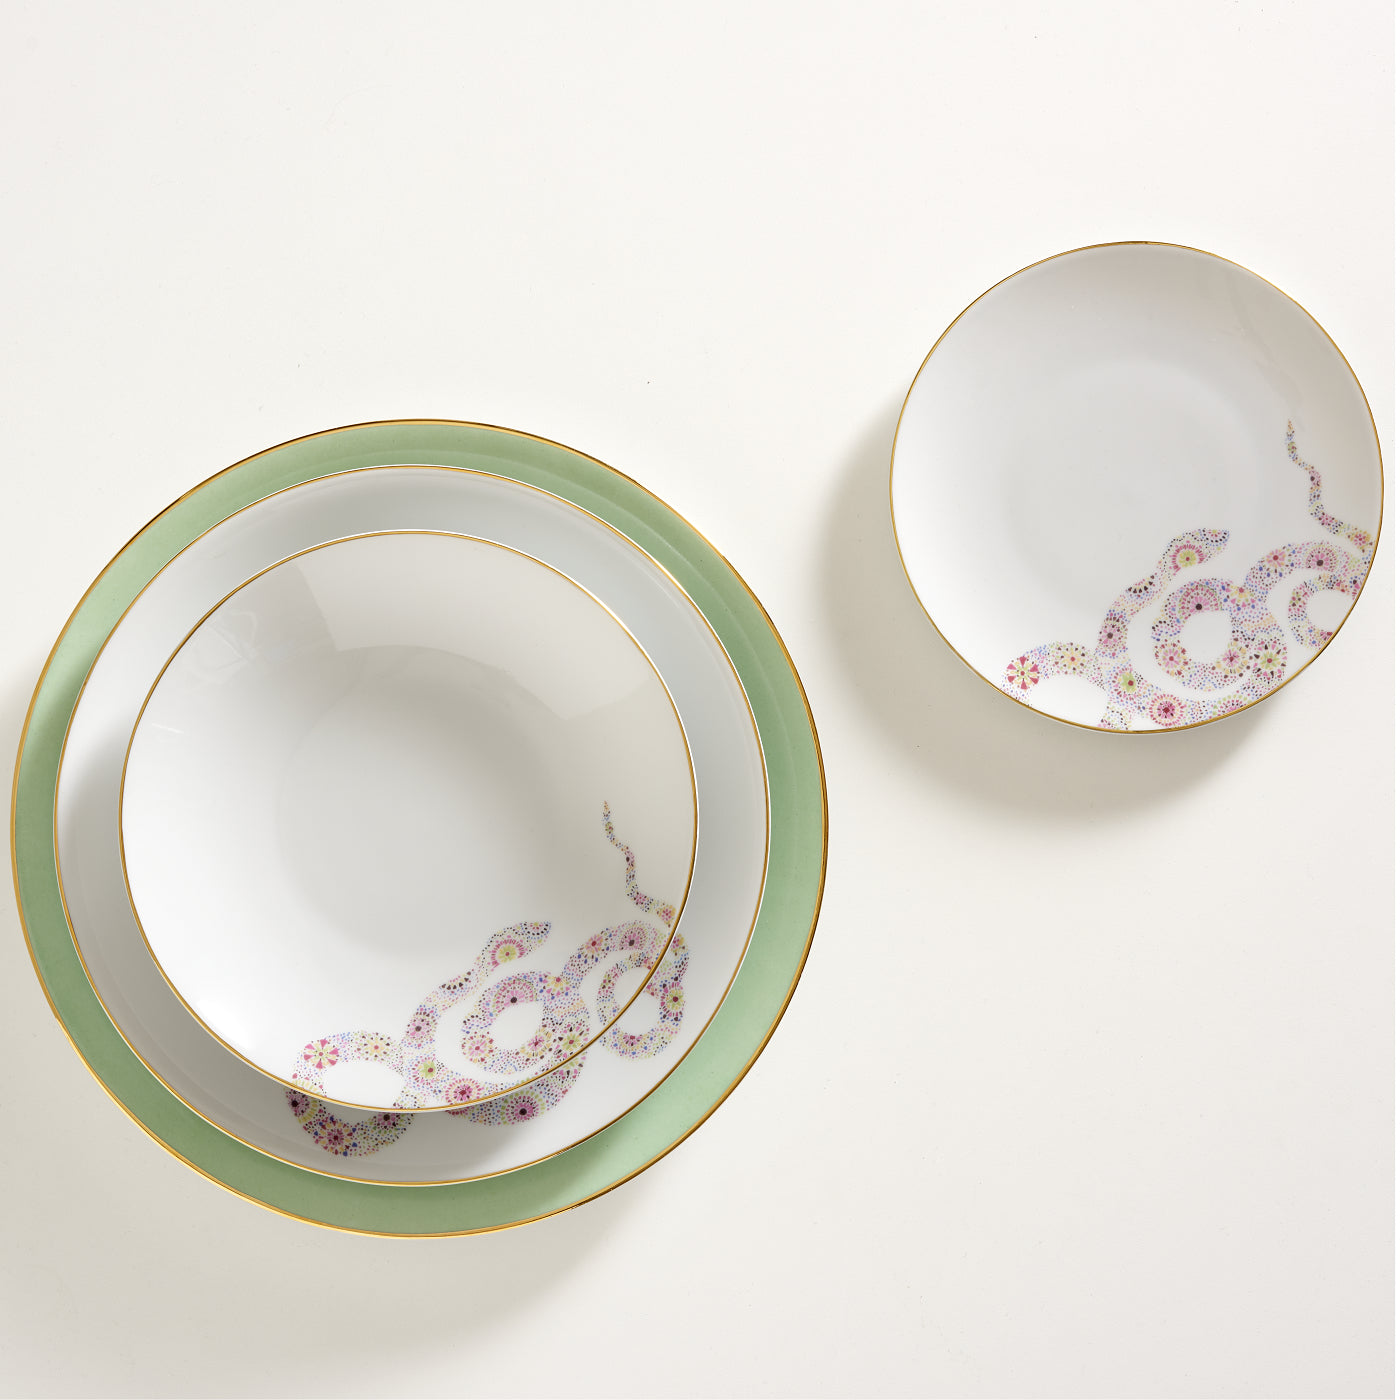 Mint Green Porcelain Set of 4 Under-Plates - Alternative view 1